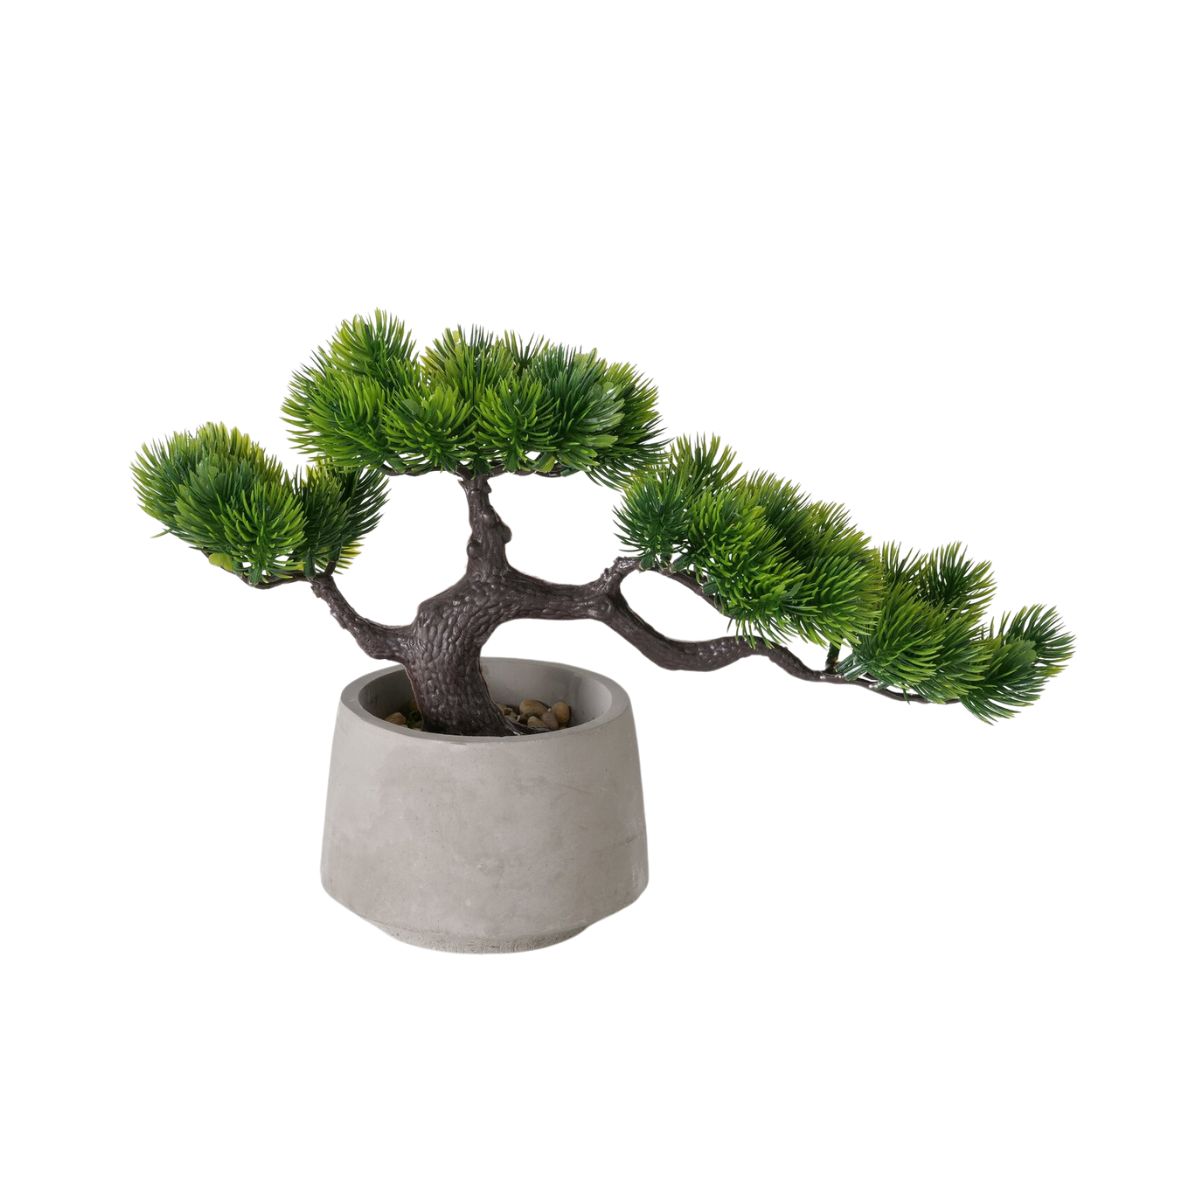 DECORATIUNI INTERIOR - Decoratiune alb/verde design bonsai in ghiveci 21 cm Boltze, hectarul.ro